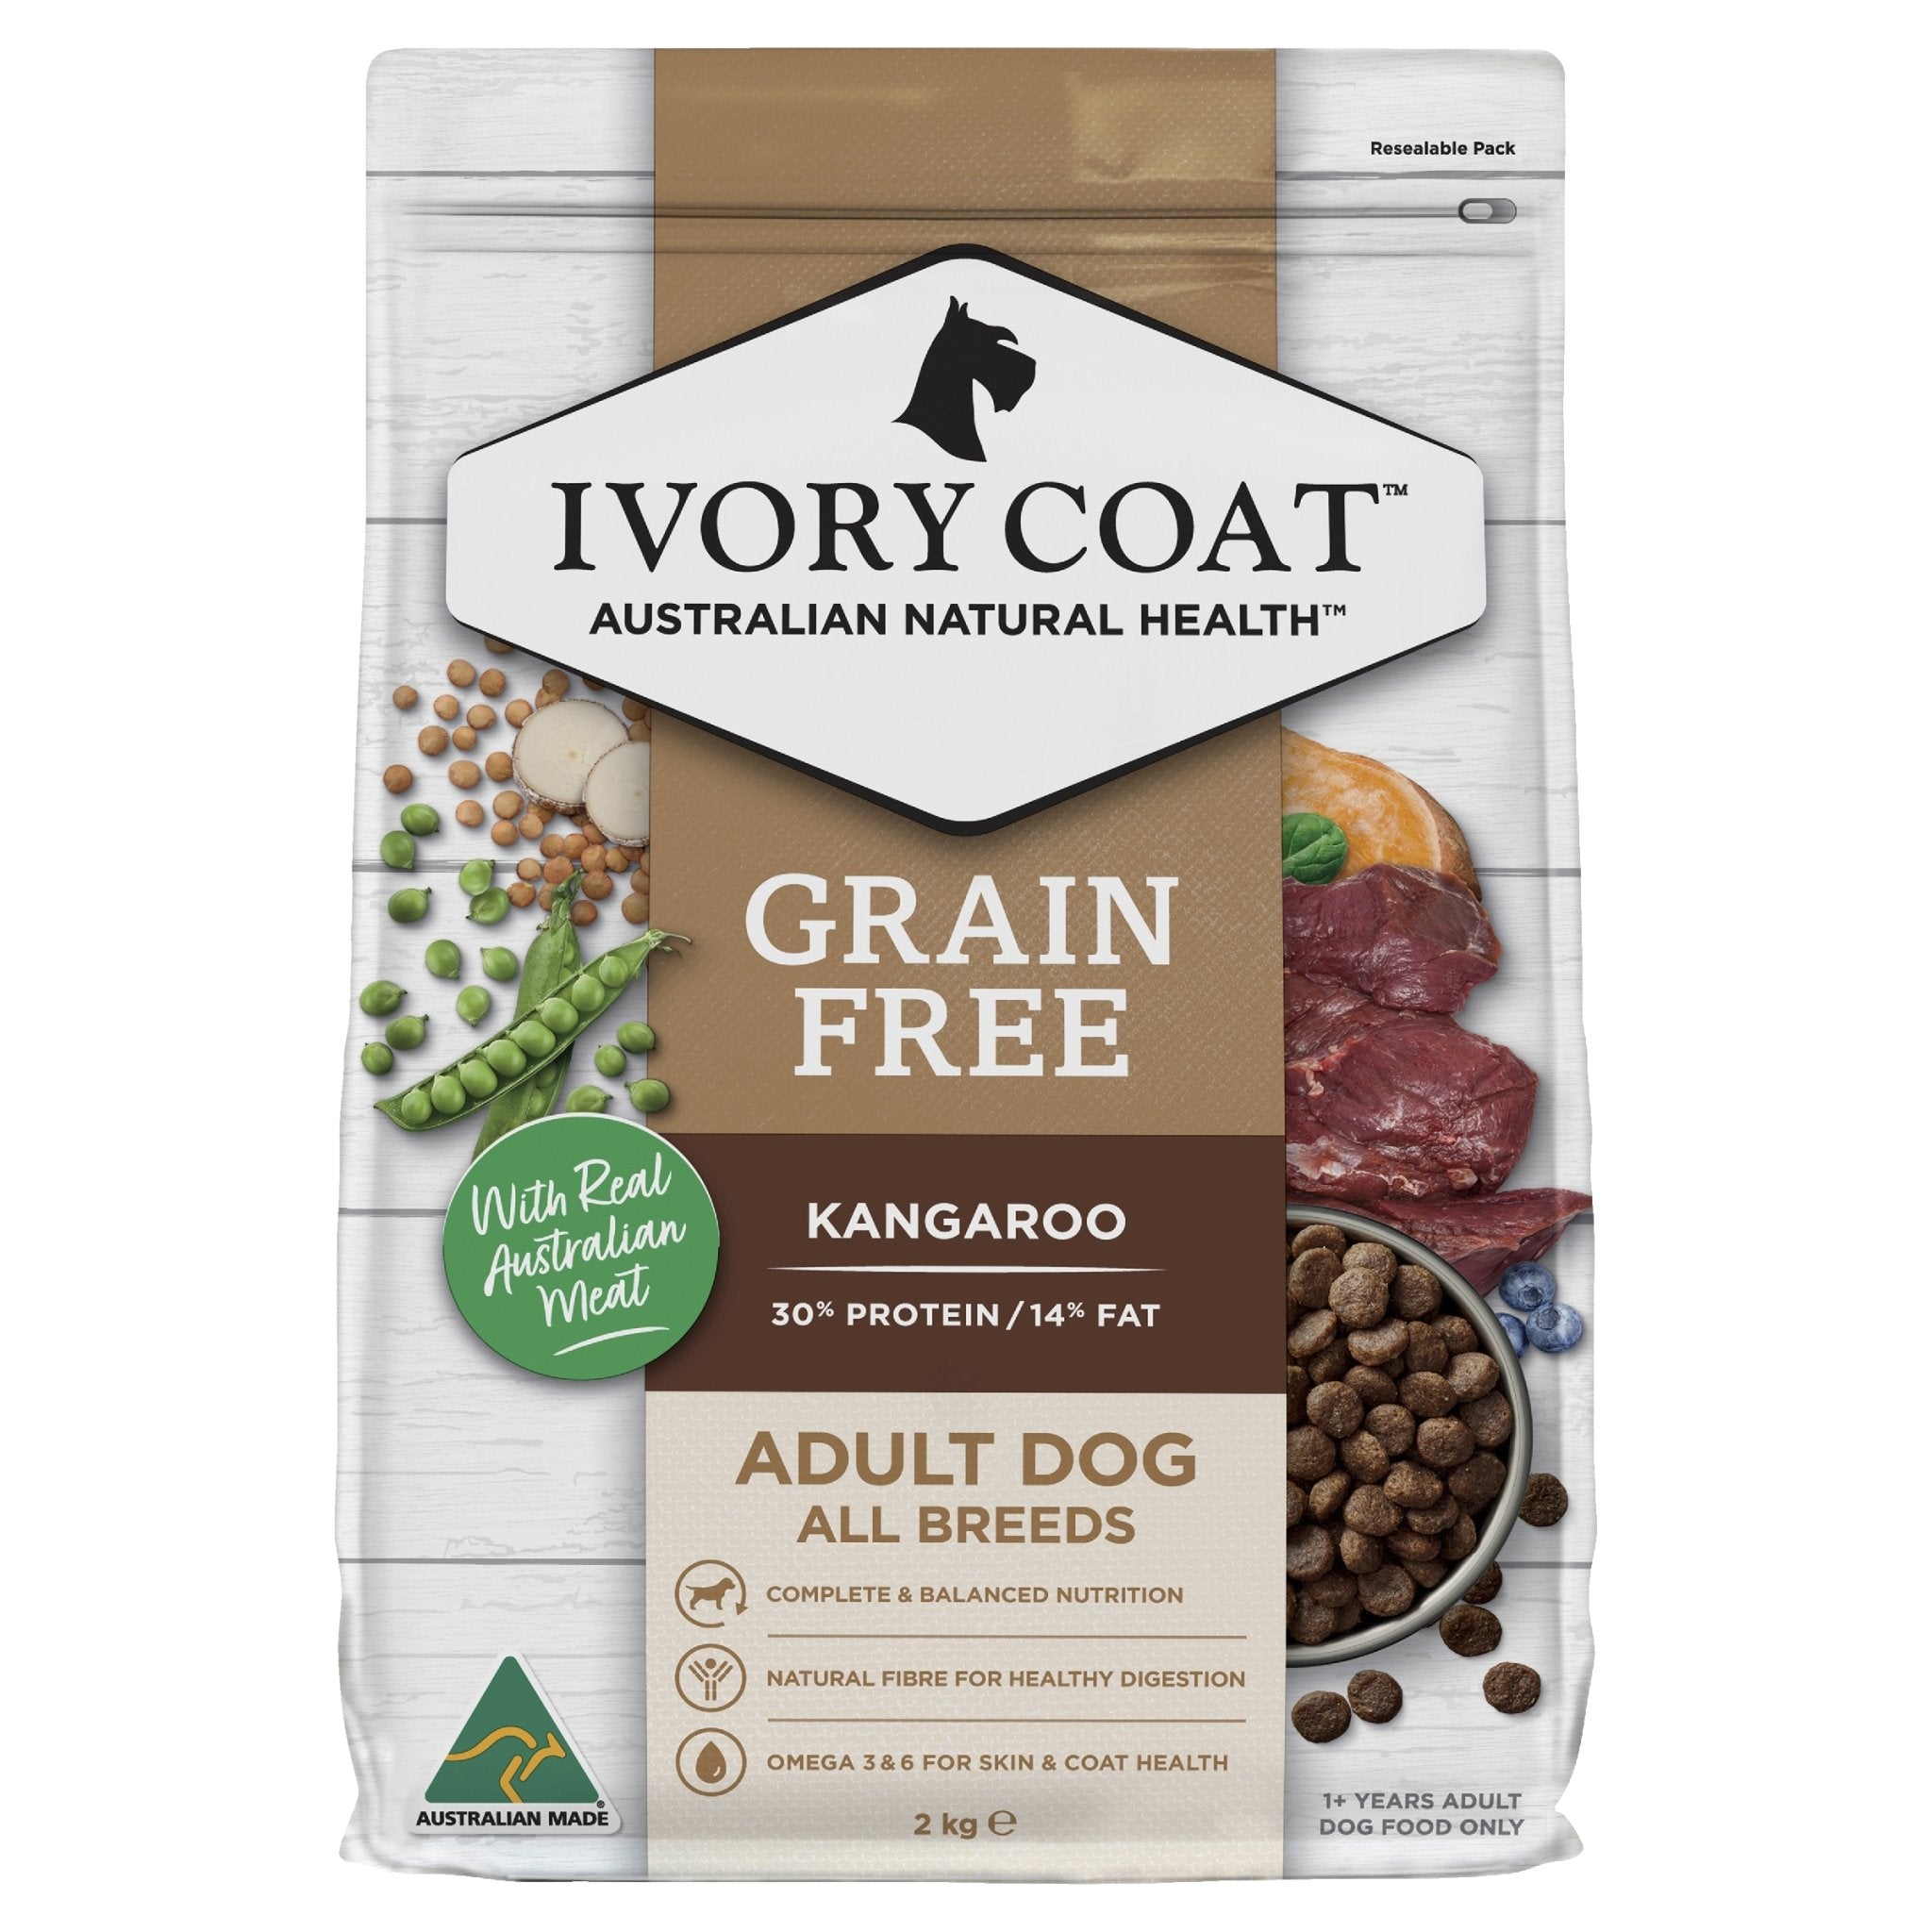 Ivory Coat Lamb & Kangaroo Grain Free Dry Dog Food